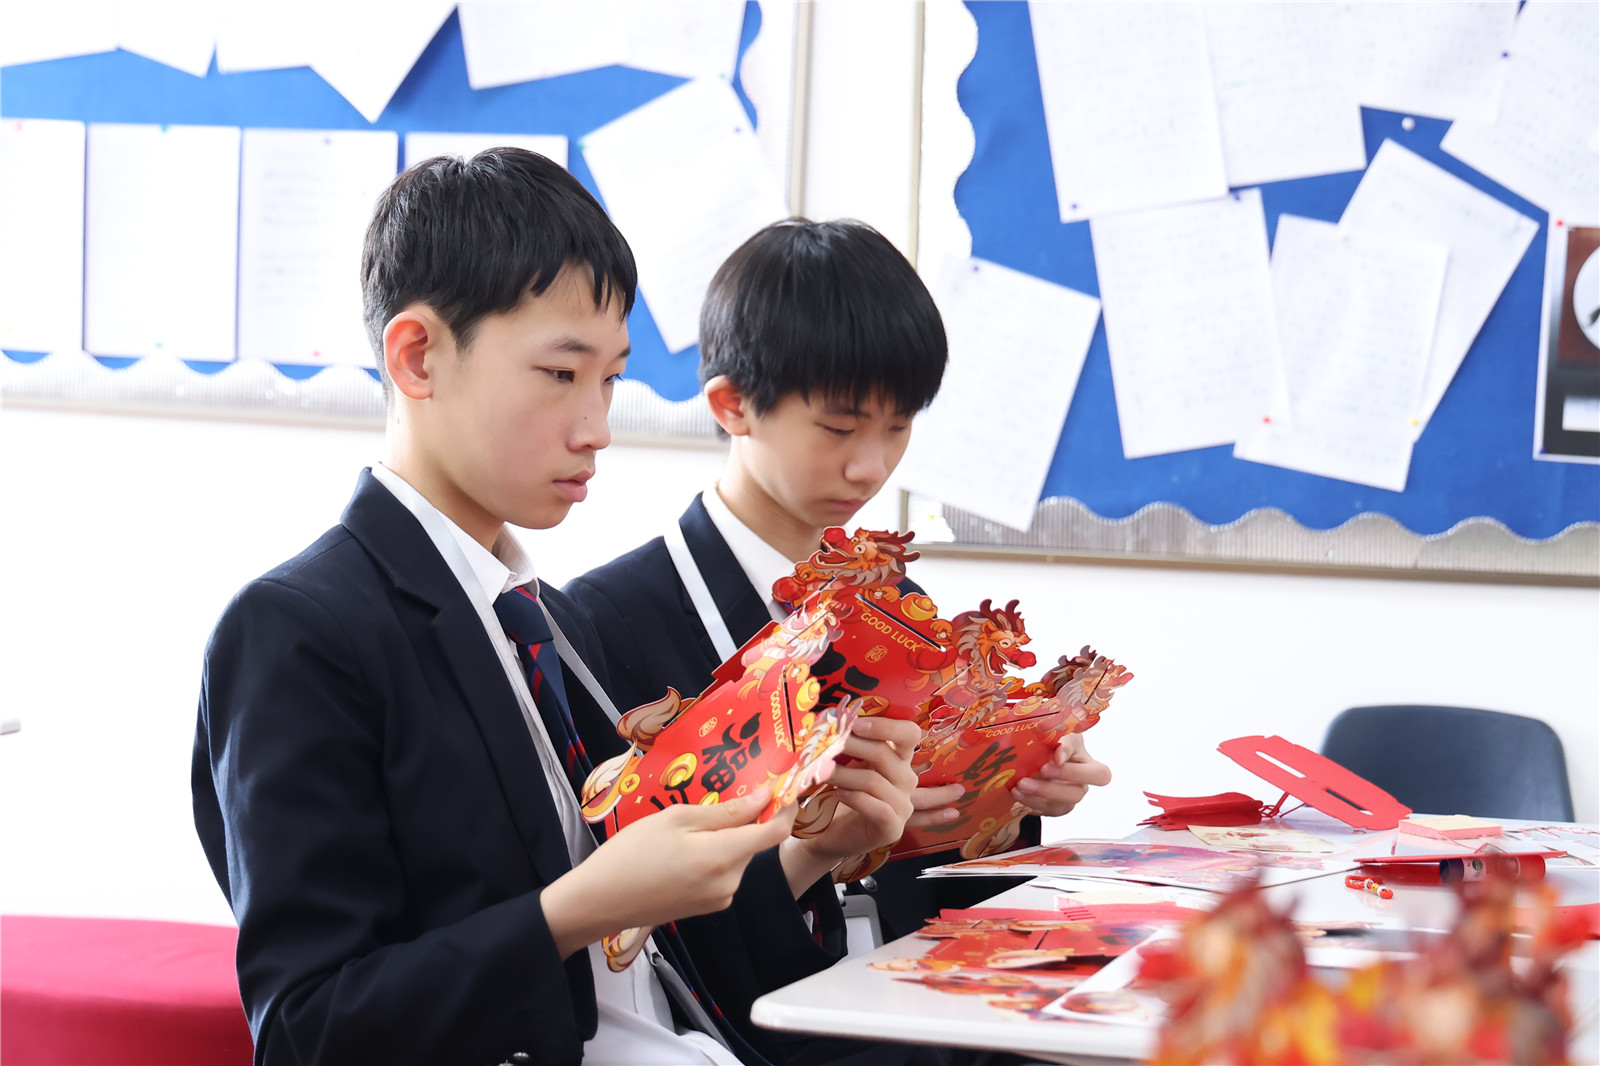 Chinese New Year celebrations - Senior School